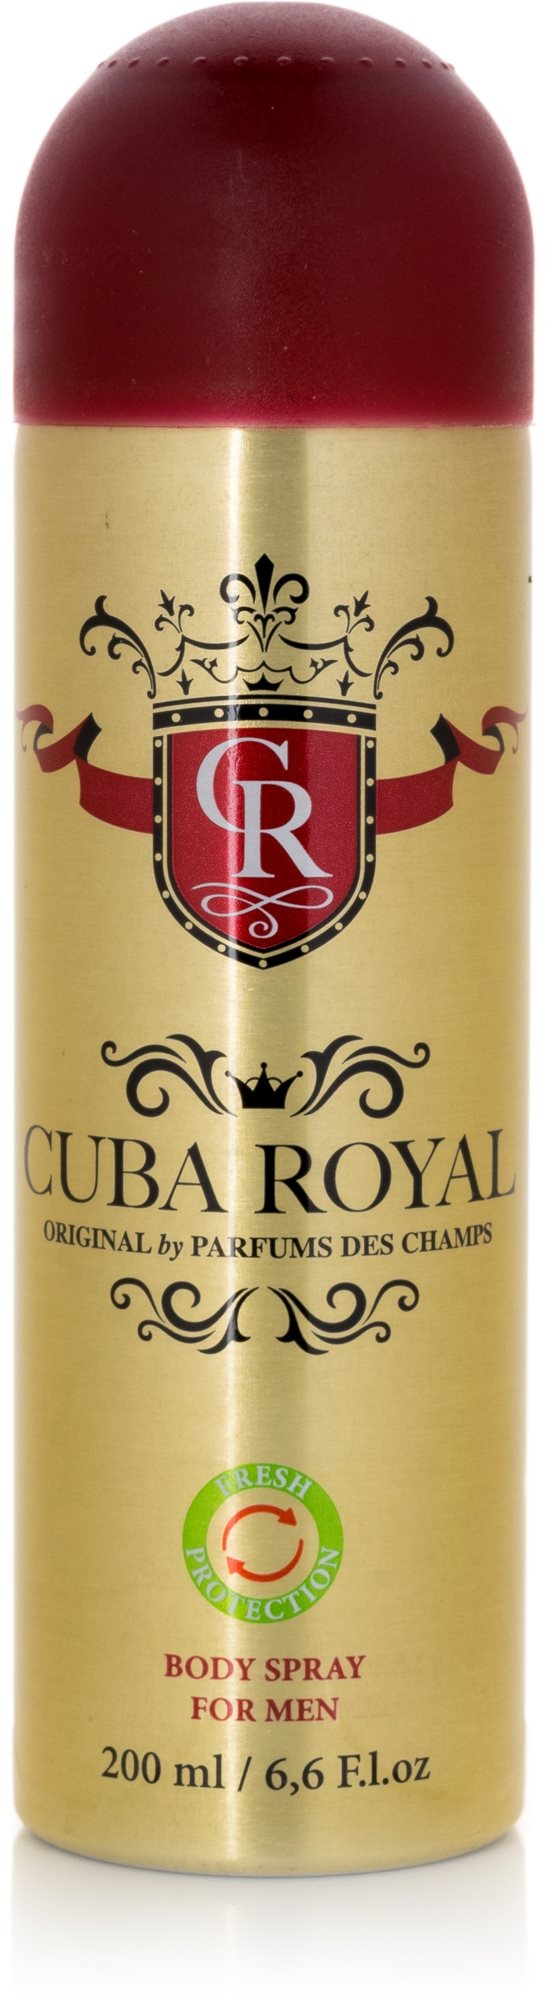 CUBA ROYAL Bodyspray 200 ml